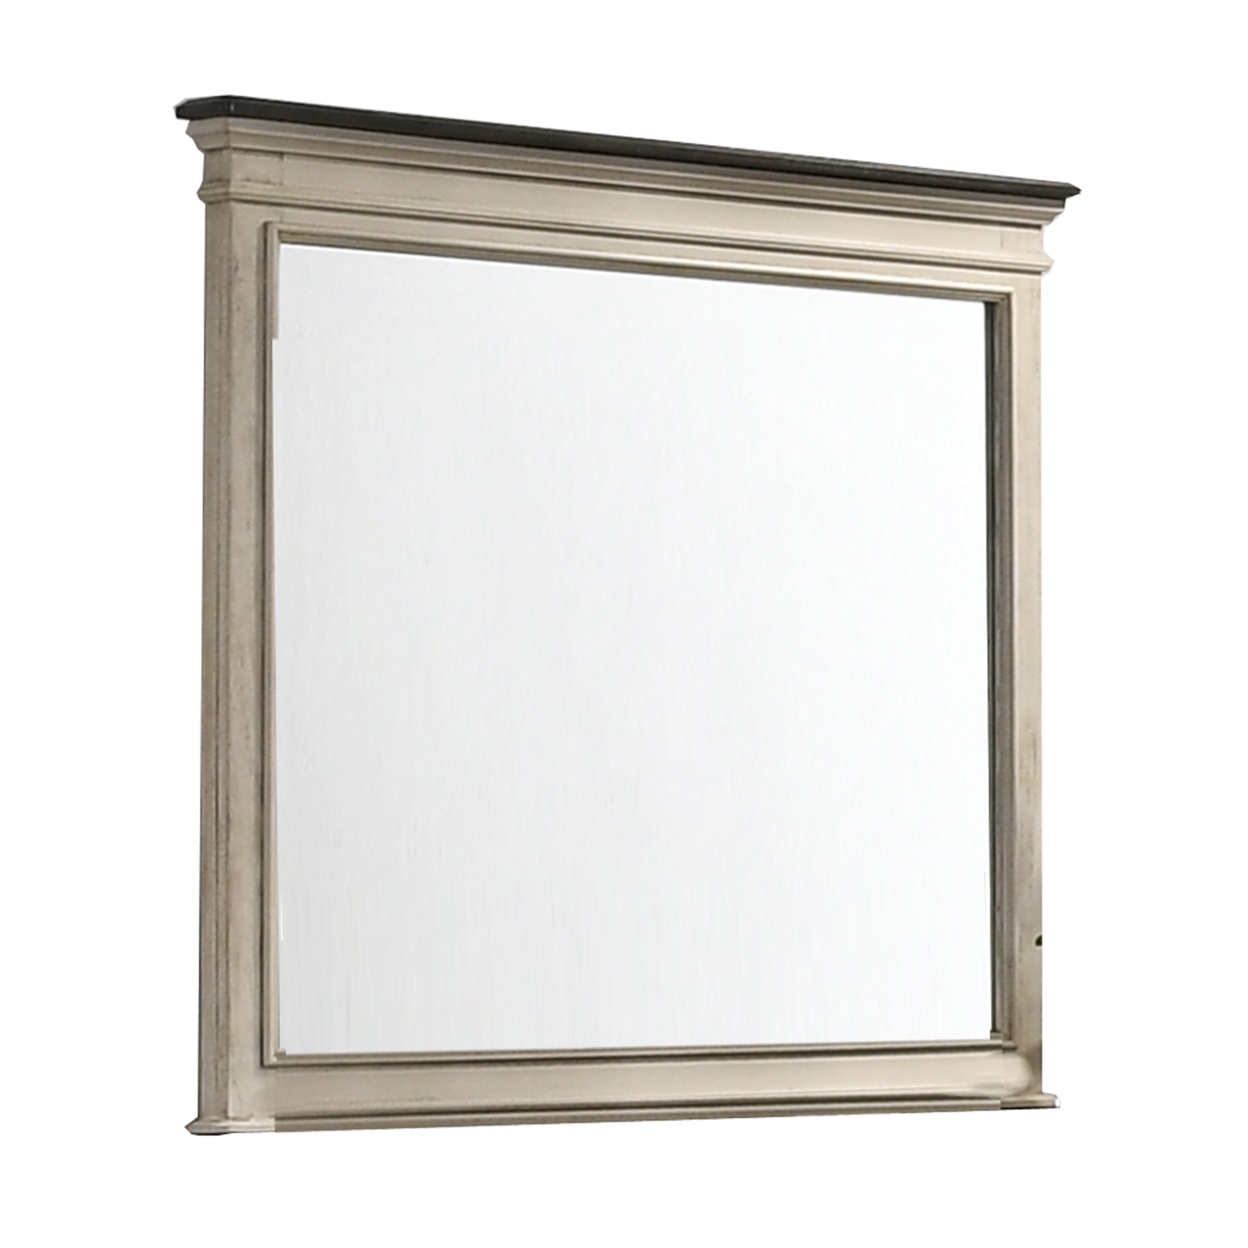 Rectangular Dresser Top Beveled Mirror With Wooden Frame, Beige And Silver- Saltoro Sherpi